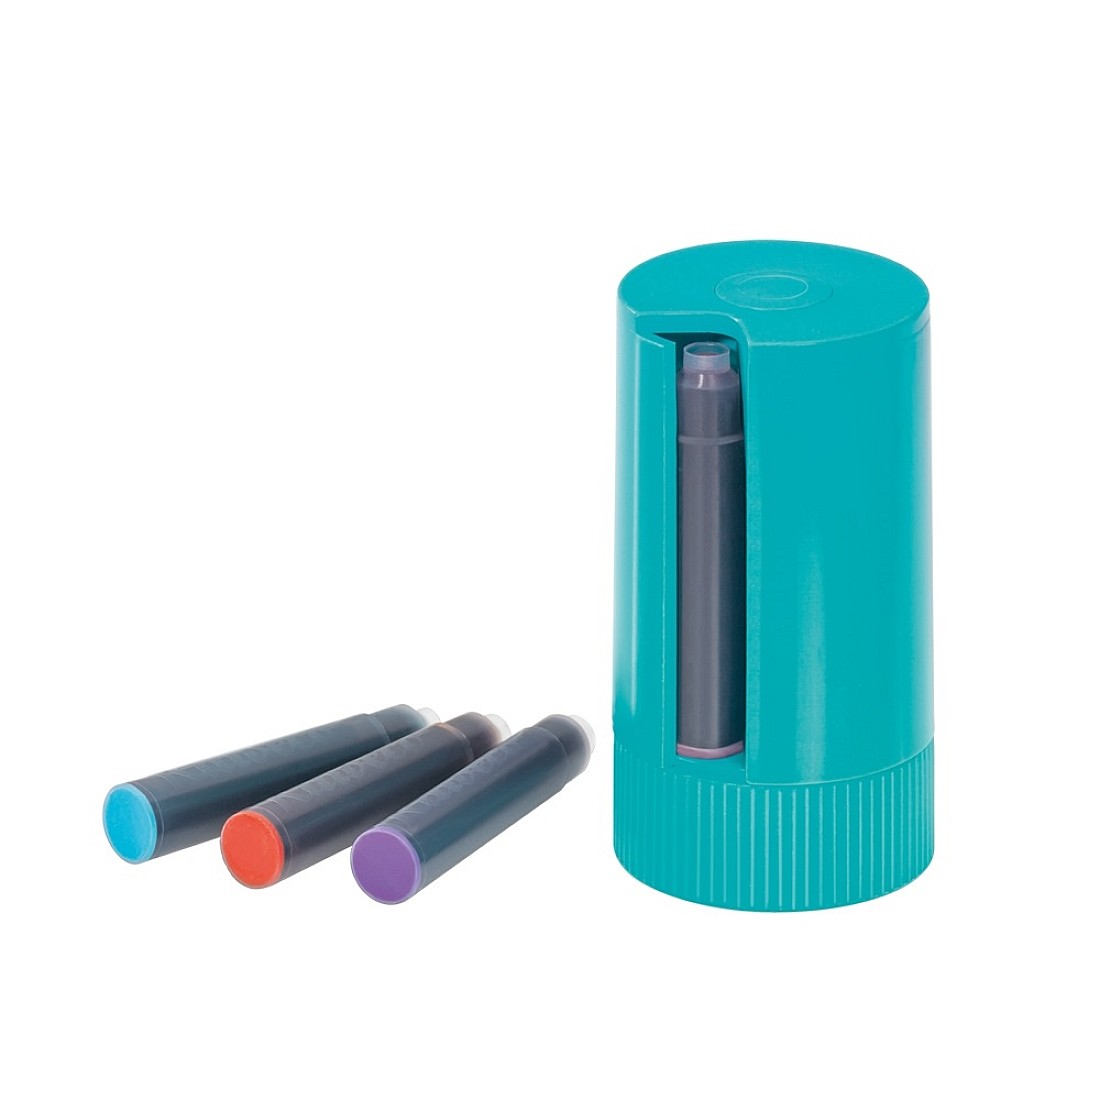 Kaweco Twist & Test Ink Cartridge Dispenser (8 colors)